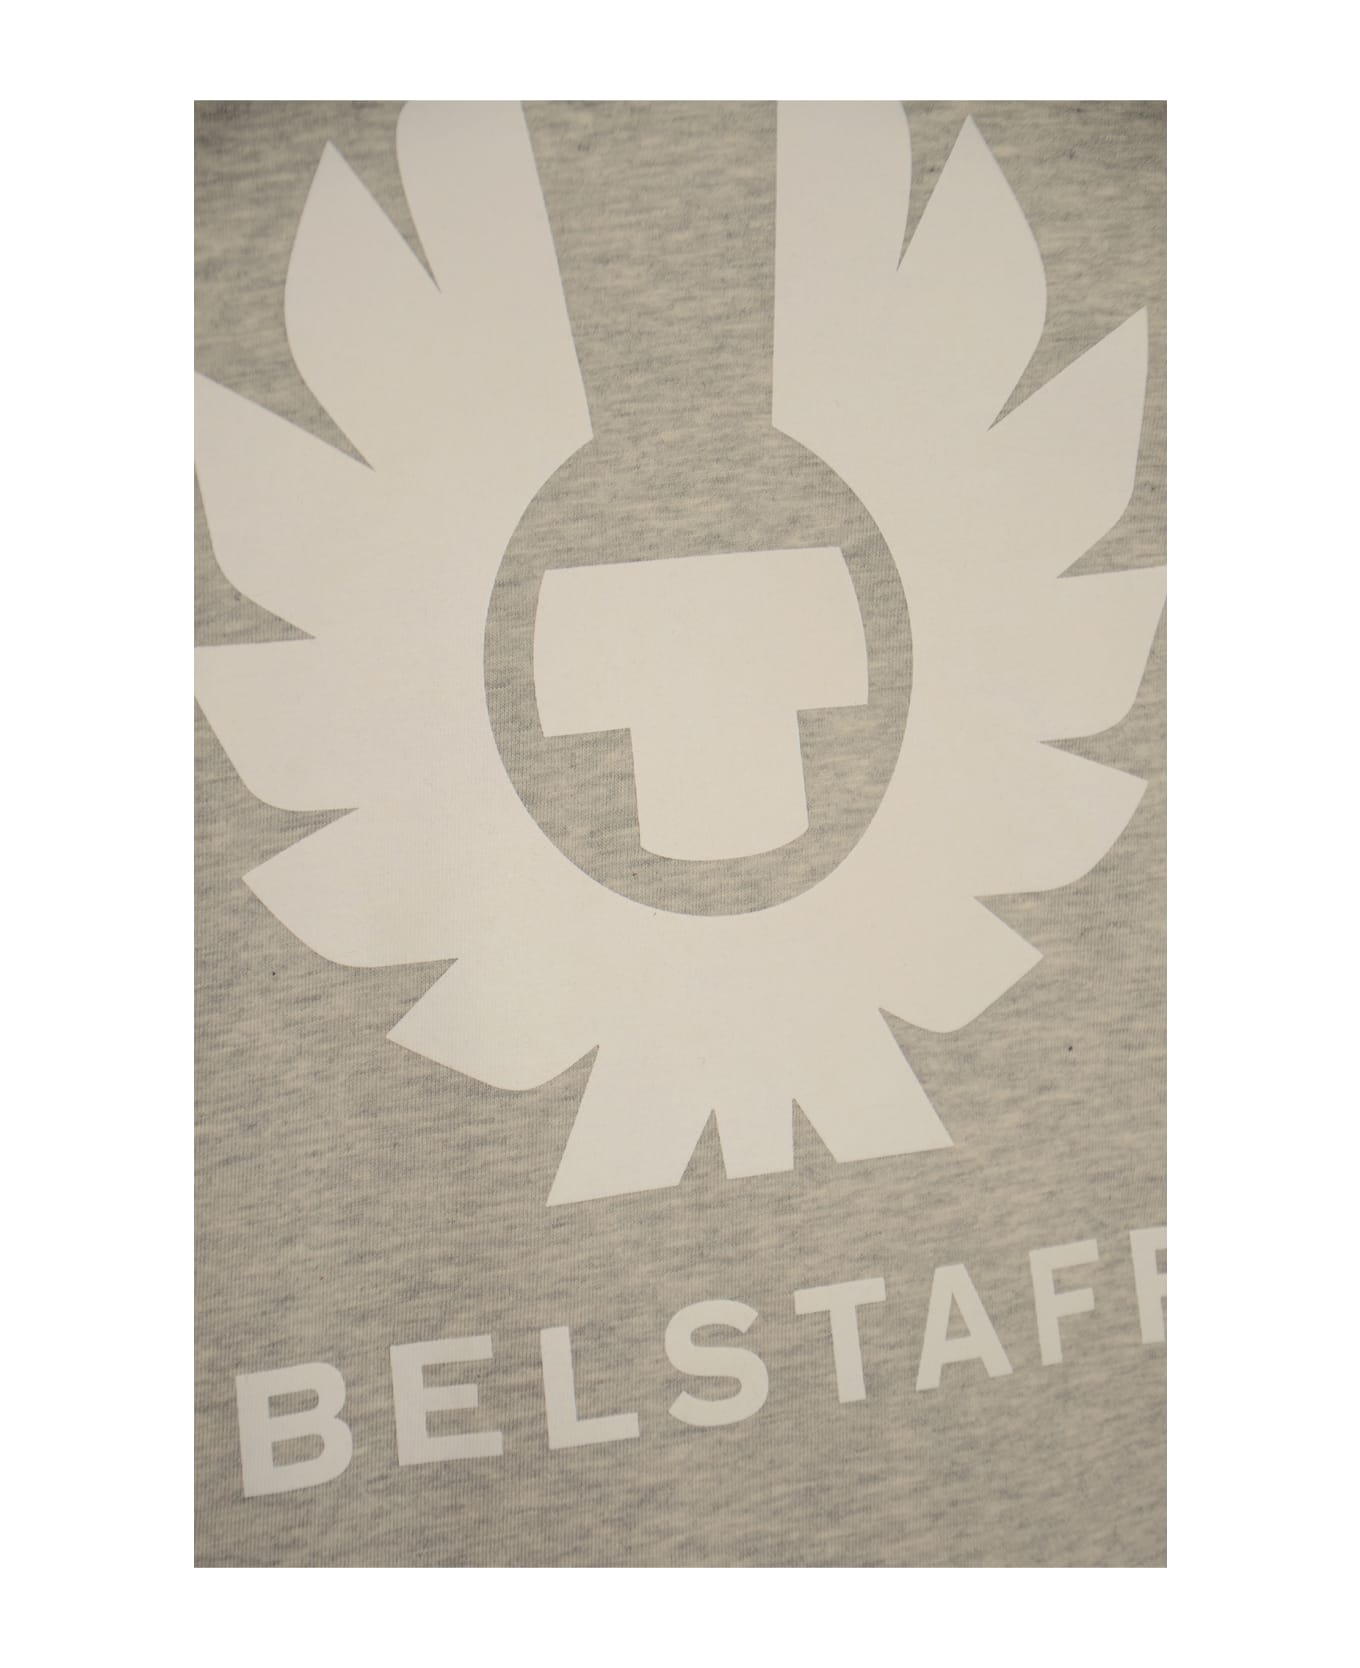 Belstaff Phoenix T-shirt - Old Silver